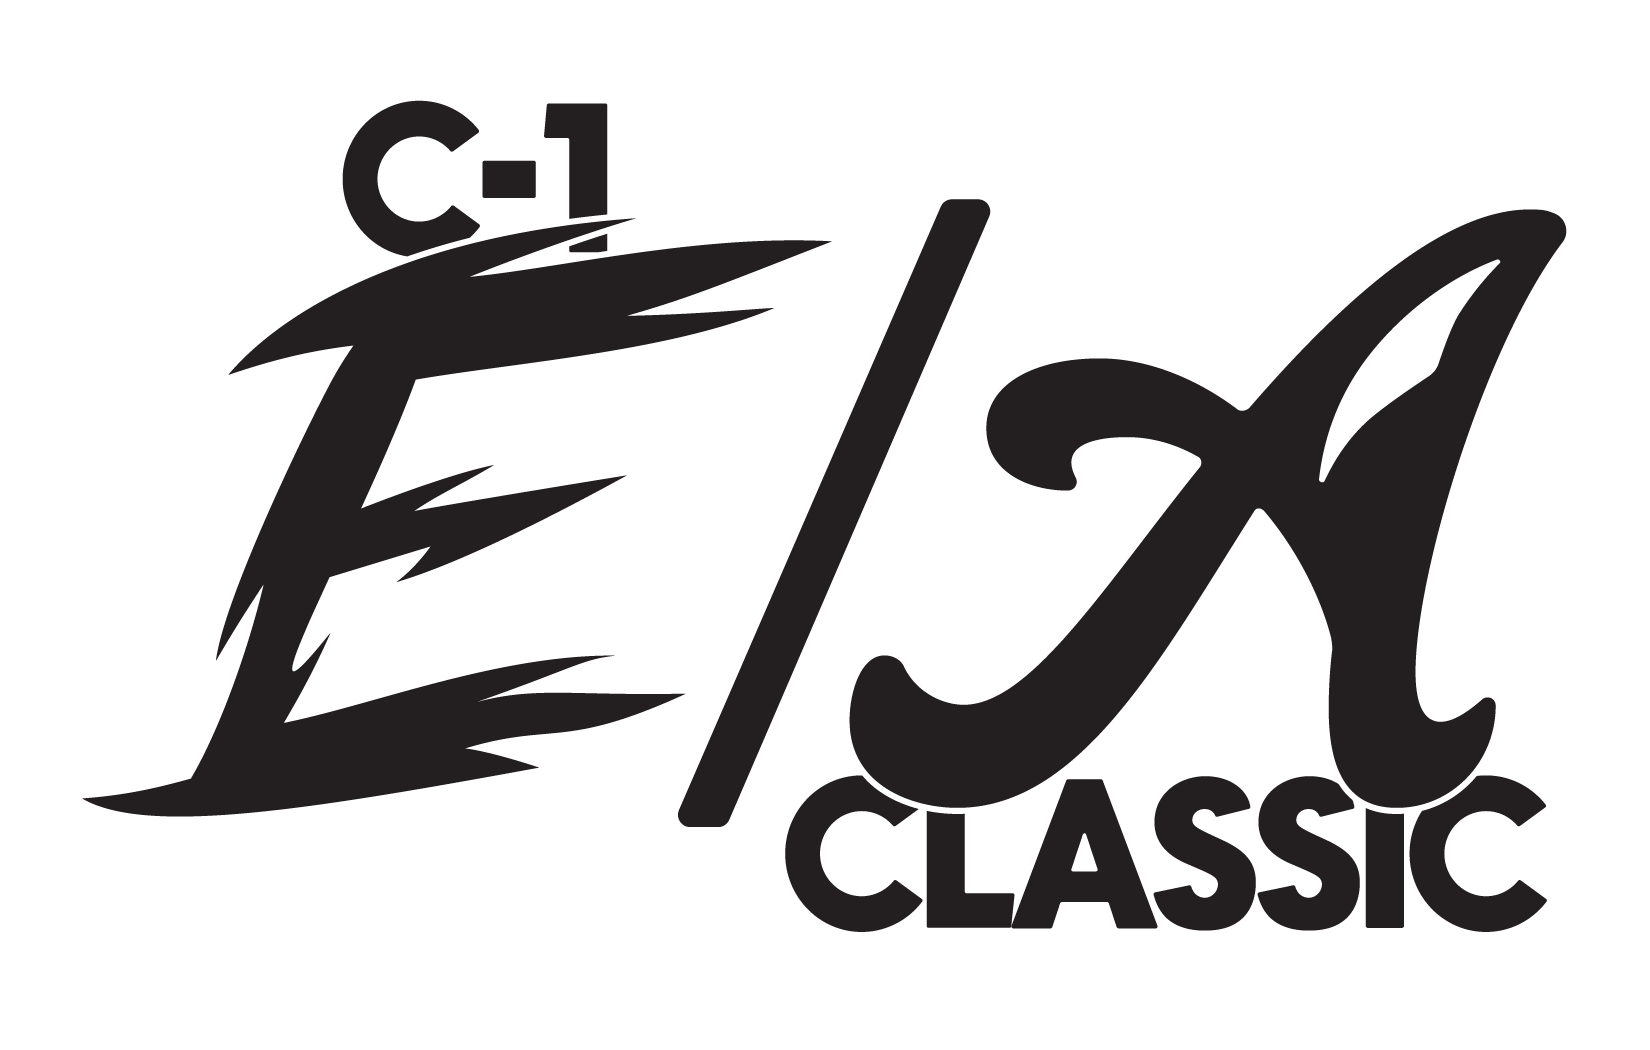 C-1 E/A Classic